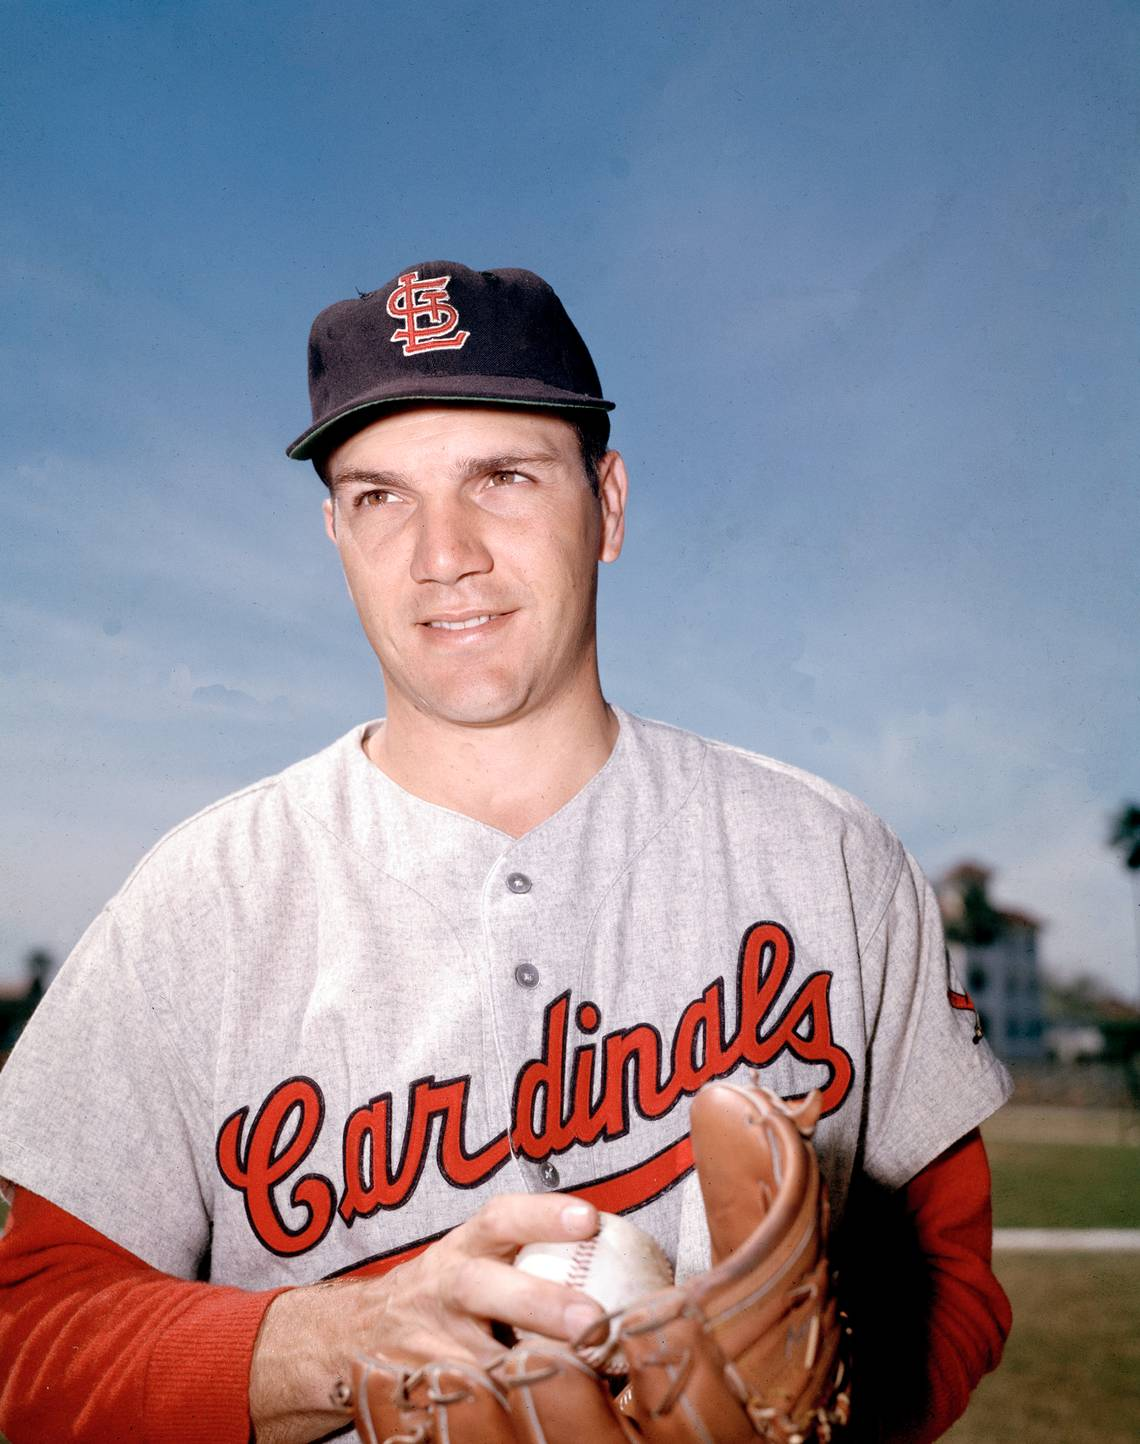 1964 St. Louis Cardinals season - Wikipedia